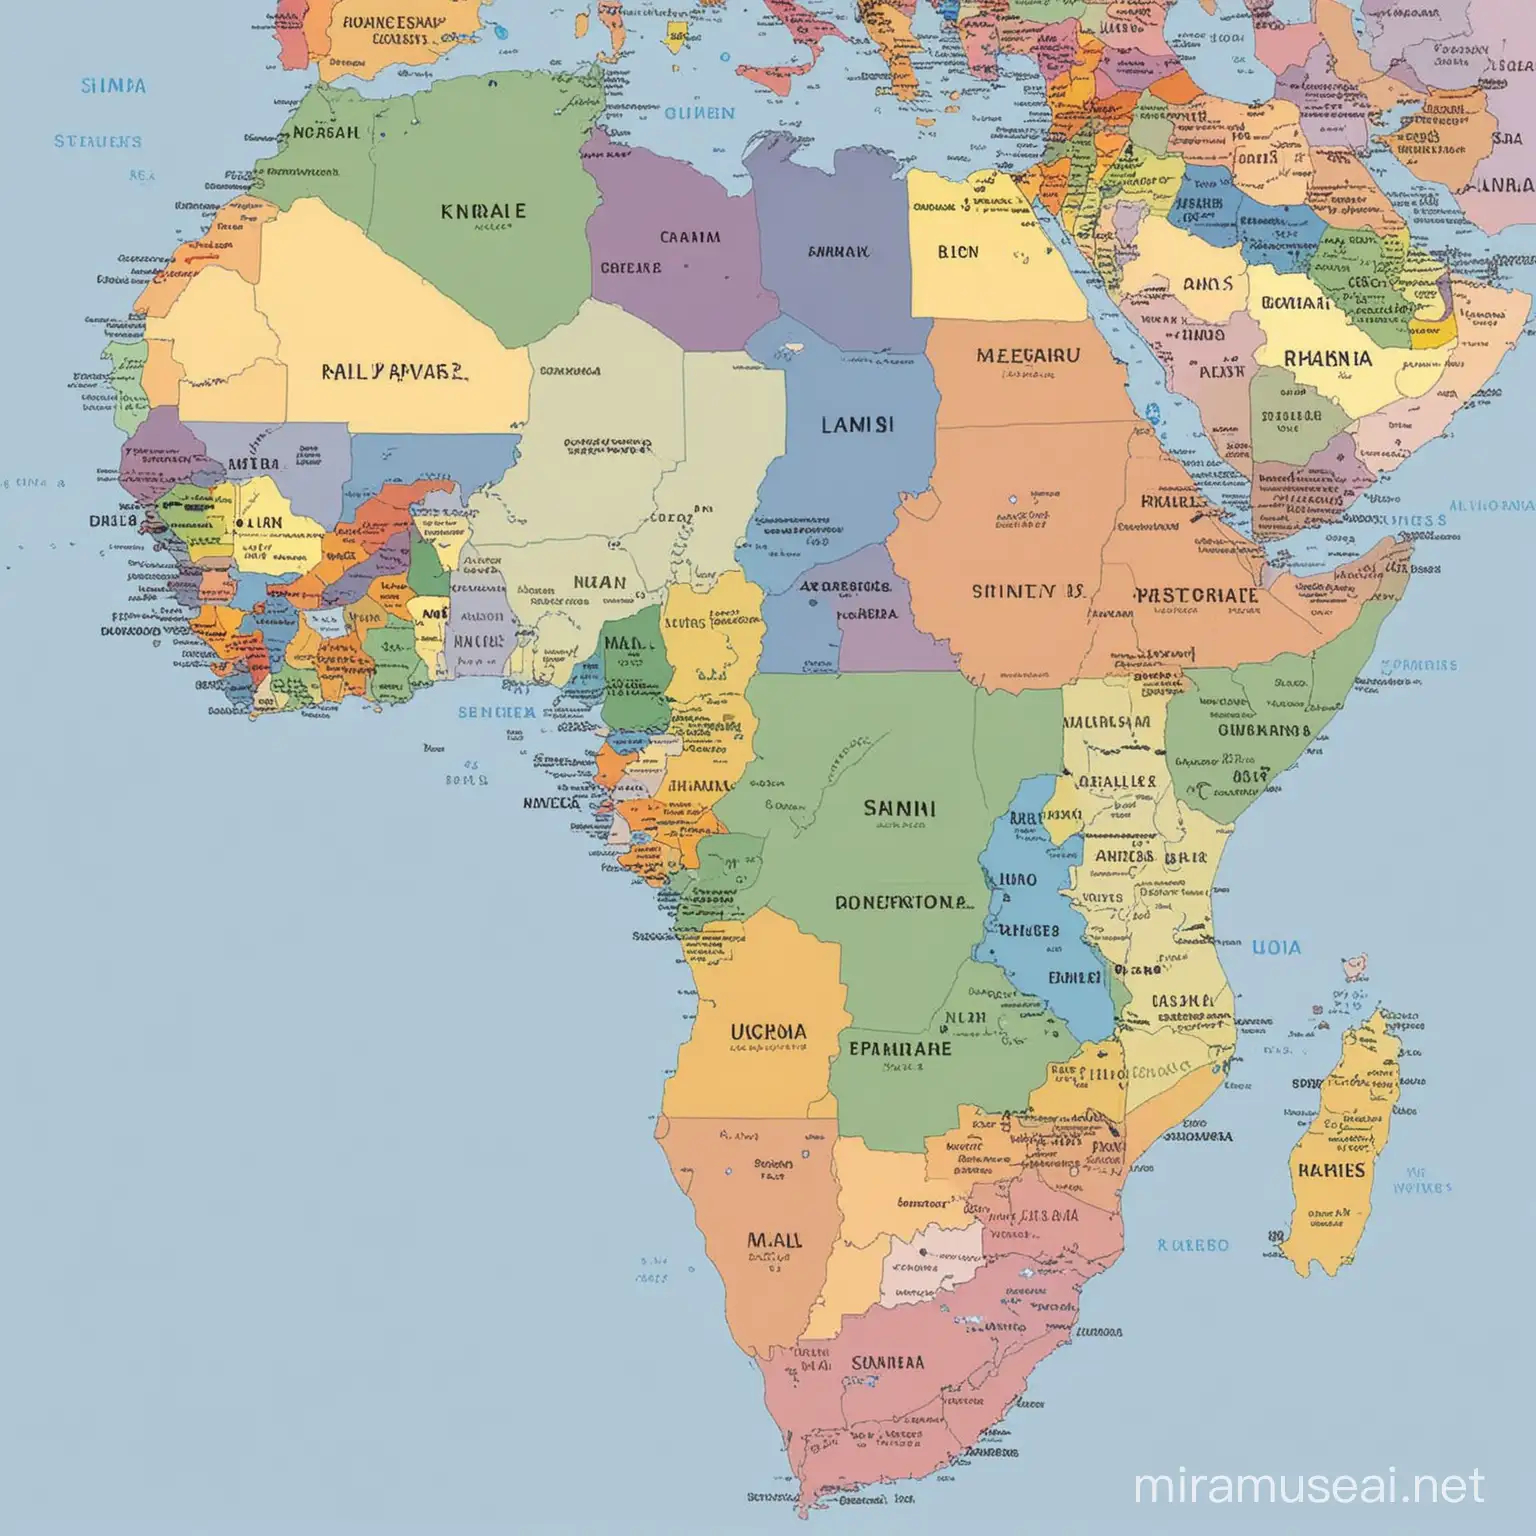 Out line of the African countries, Mali, Senegal, Gambia, Guinea, Niger, Chad, Mauritanea, Burkina Faso